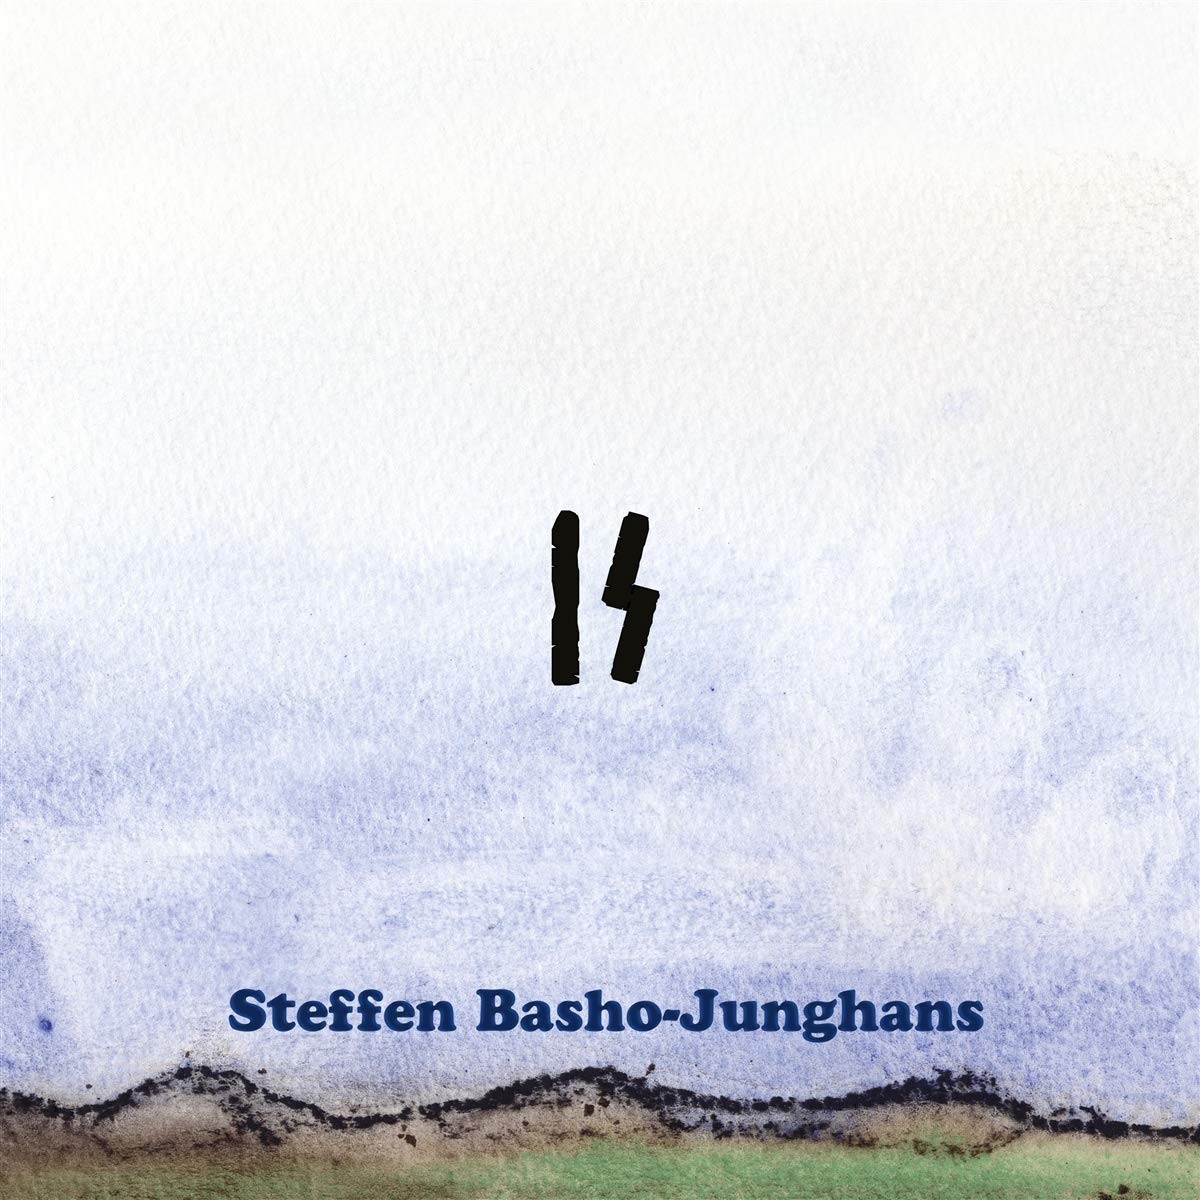 Steffen Basho-Junghans - Is